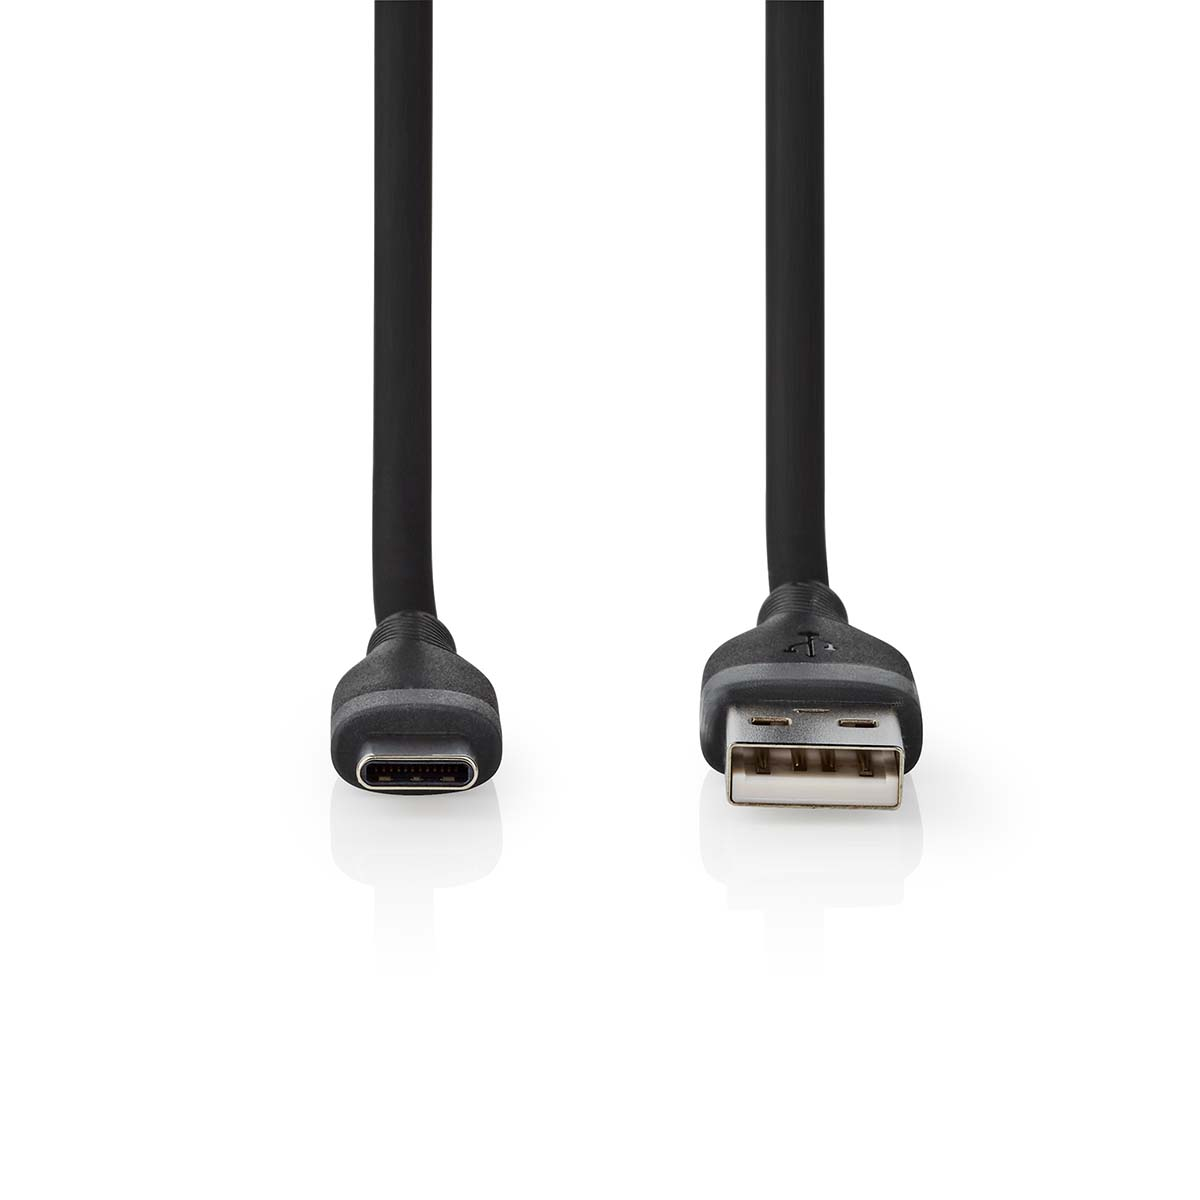 USB-Kabel CCGB60800BK15, NEDIS